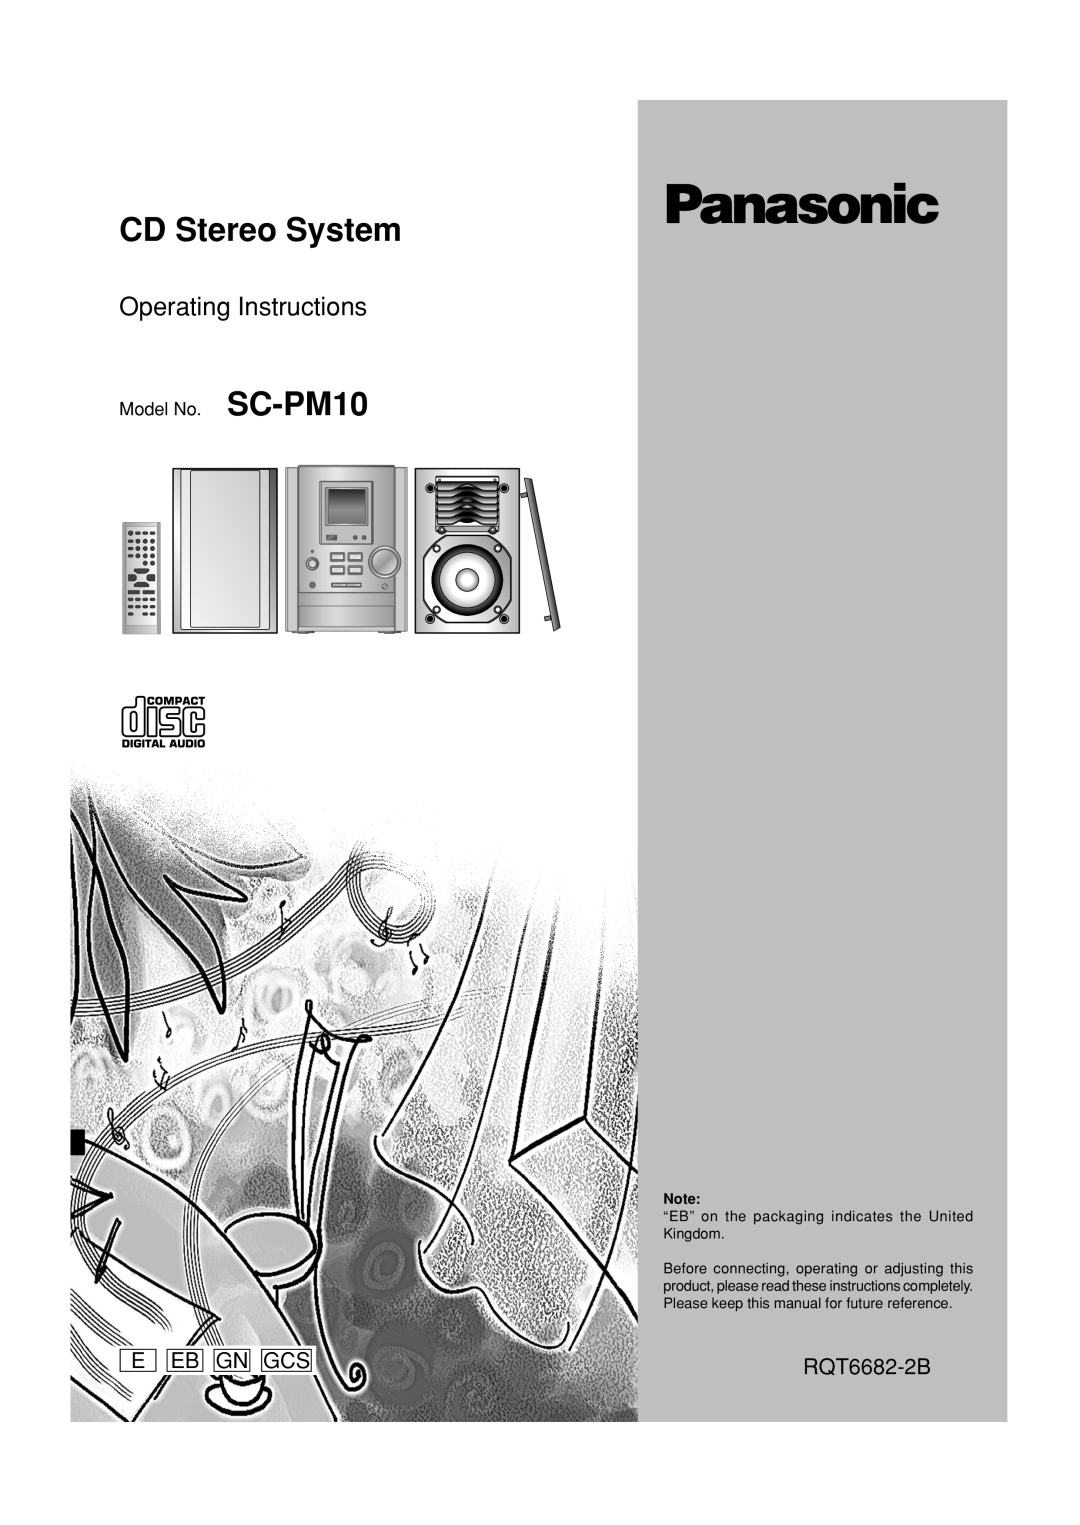 Panasonic SC-PM10 operating instructions E Eb Gn Gcs, RQT6682-2B, CD Stereo System, Operating Instructions 